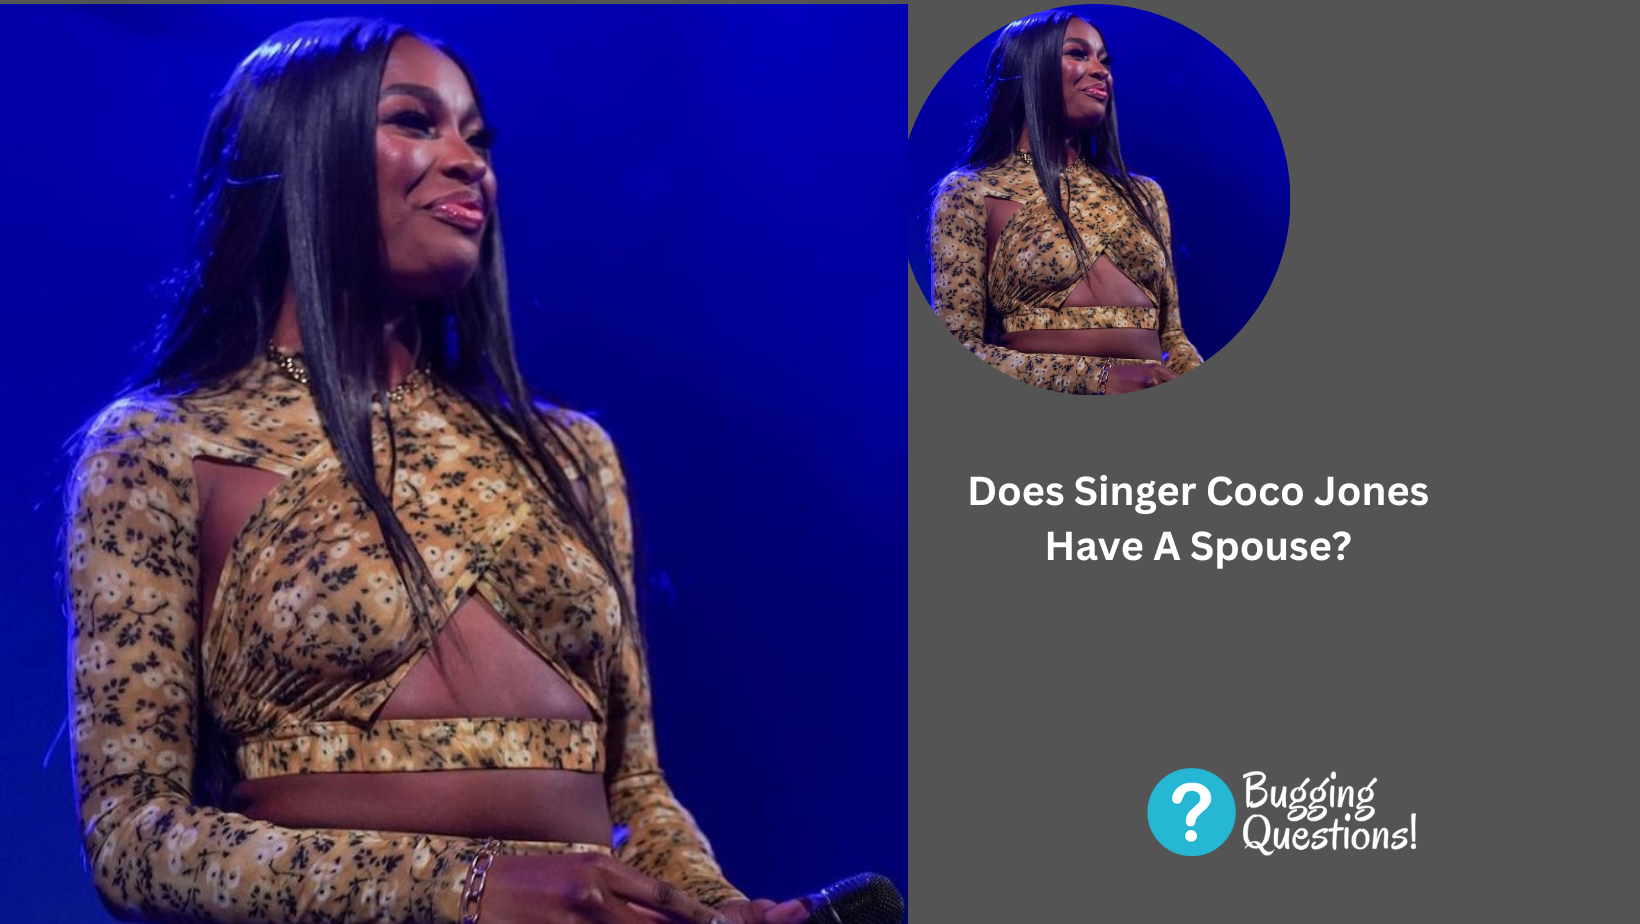 Does Singer Coco Jones Have A Spouse?